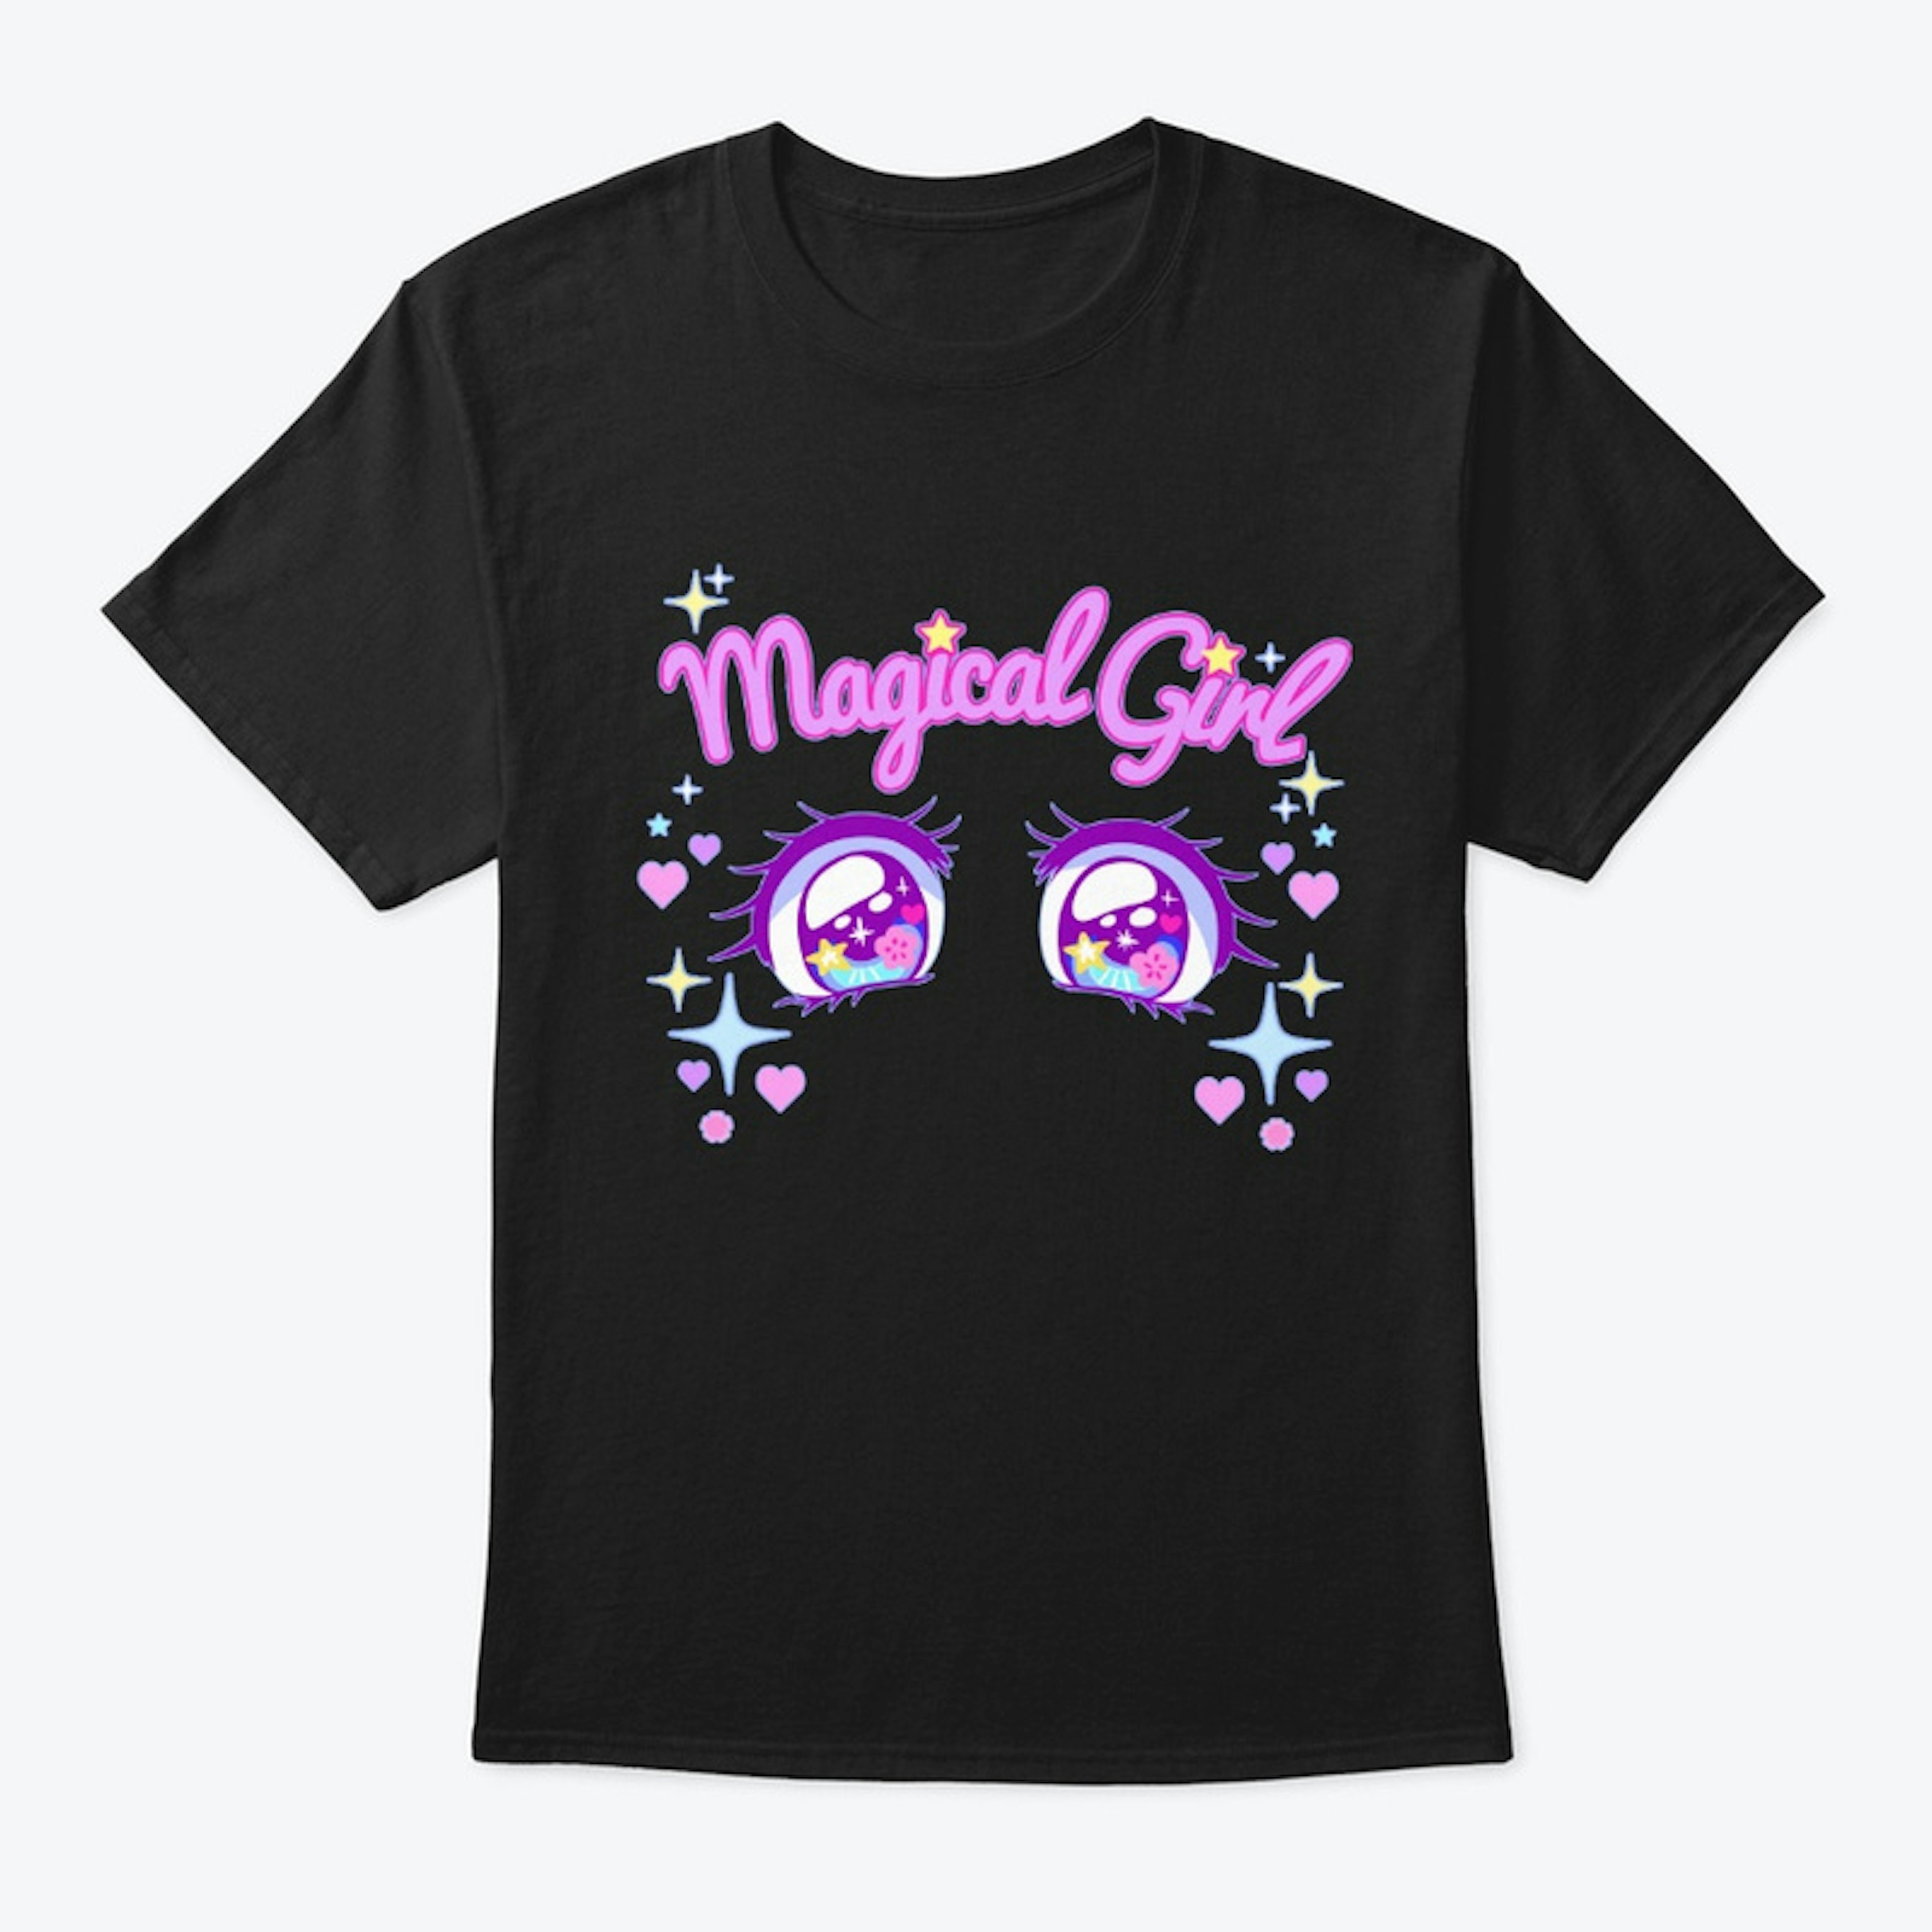 Magical Girl Tee